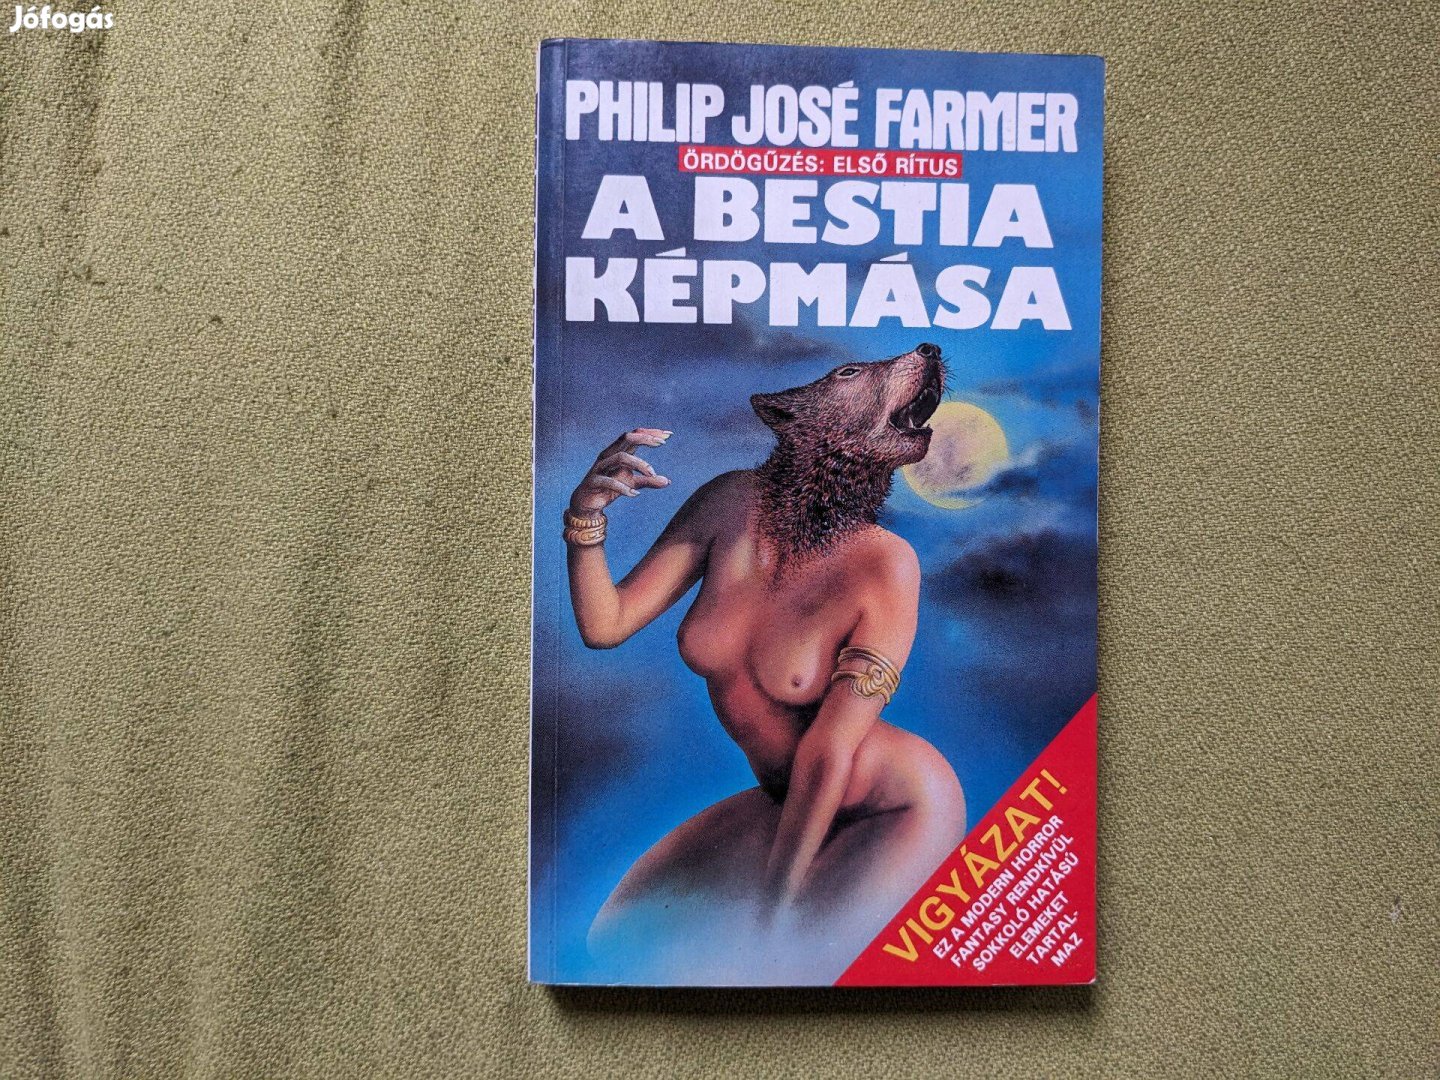 Philip José Farmer: A bestia képmása